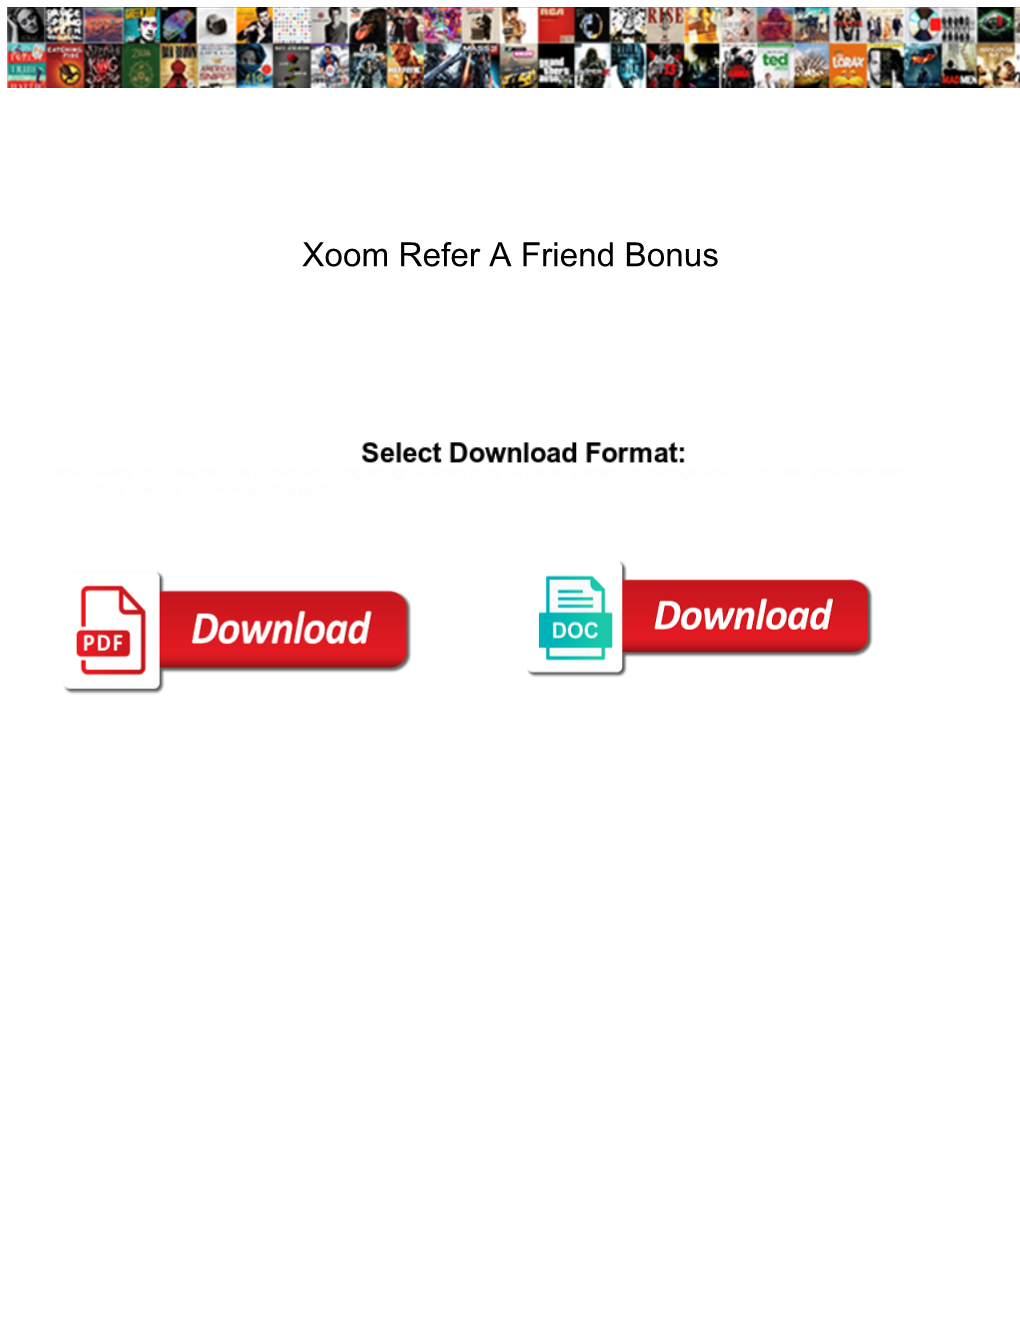 Xoom Refer a Friend Bonus